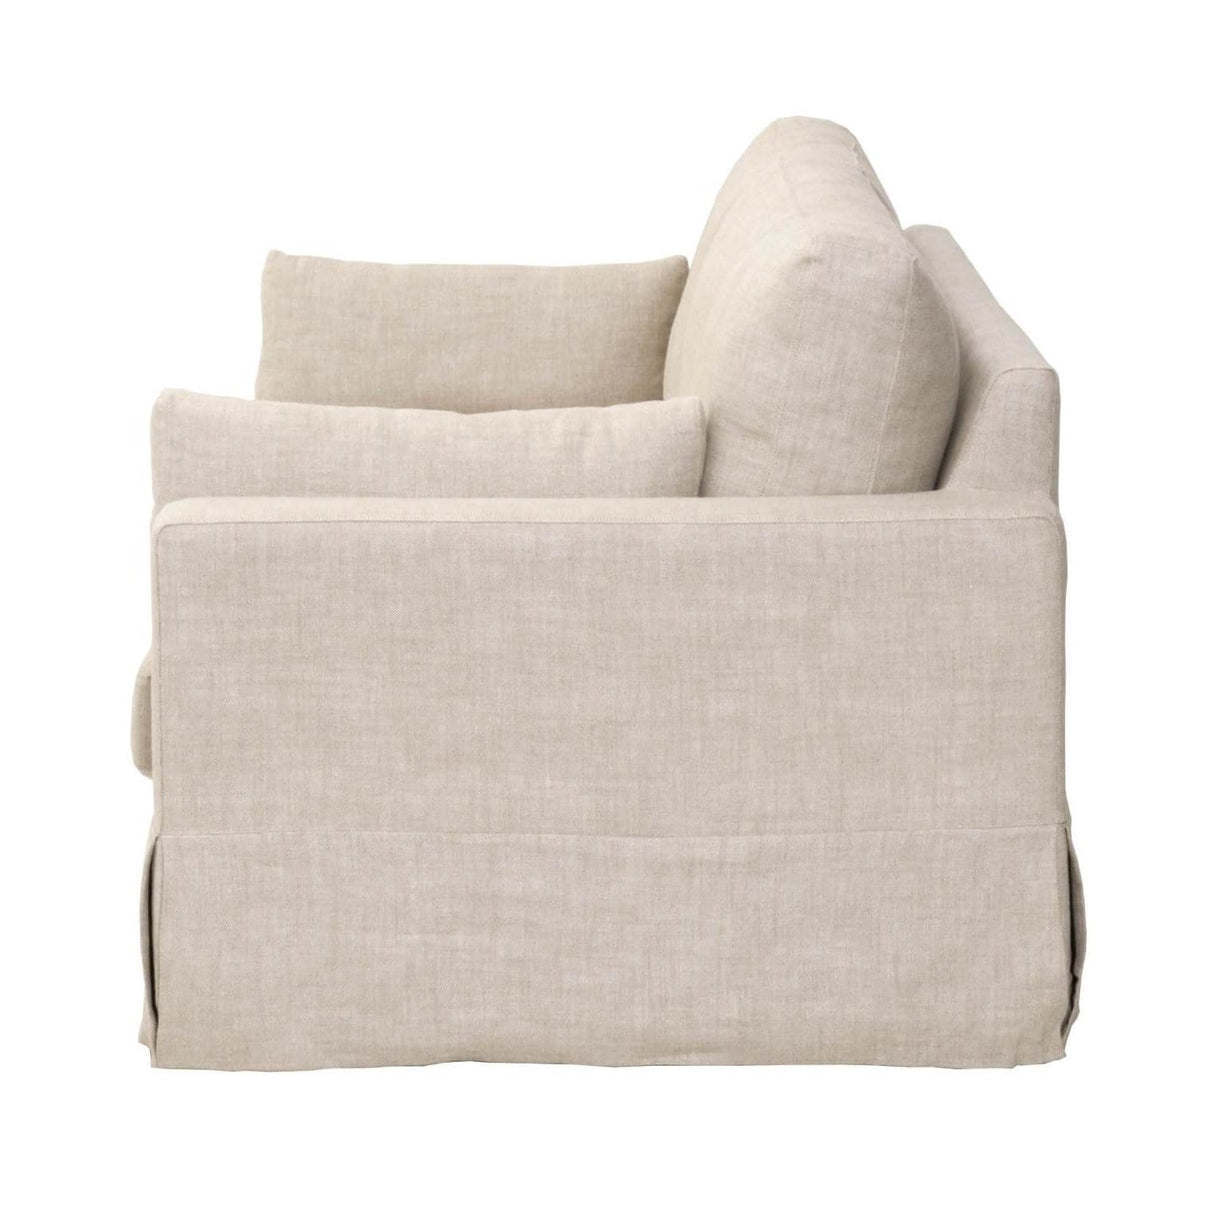 BLU Home Maxwell 89" Sofa - Bisque French Linen Furniture orient-express-6500-3.BIS 00842279102944